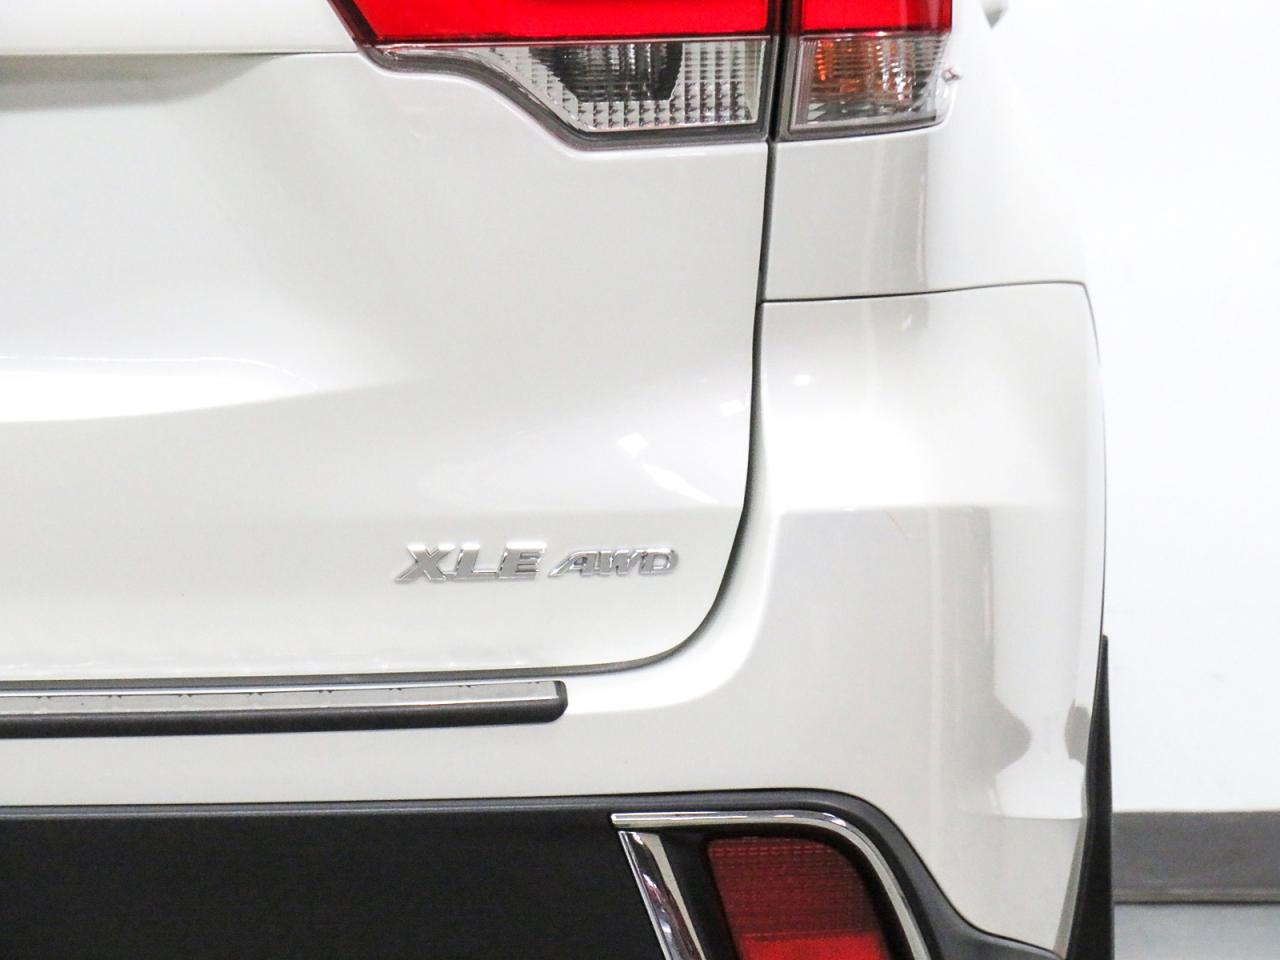 2019 Toyota Highlander XLE | AWD | 8 Pass | Nav | Sunroof | BSM | CarPlay